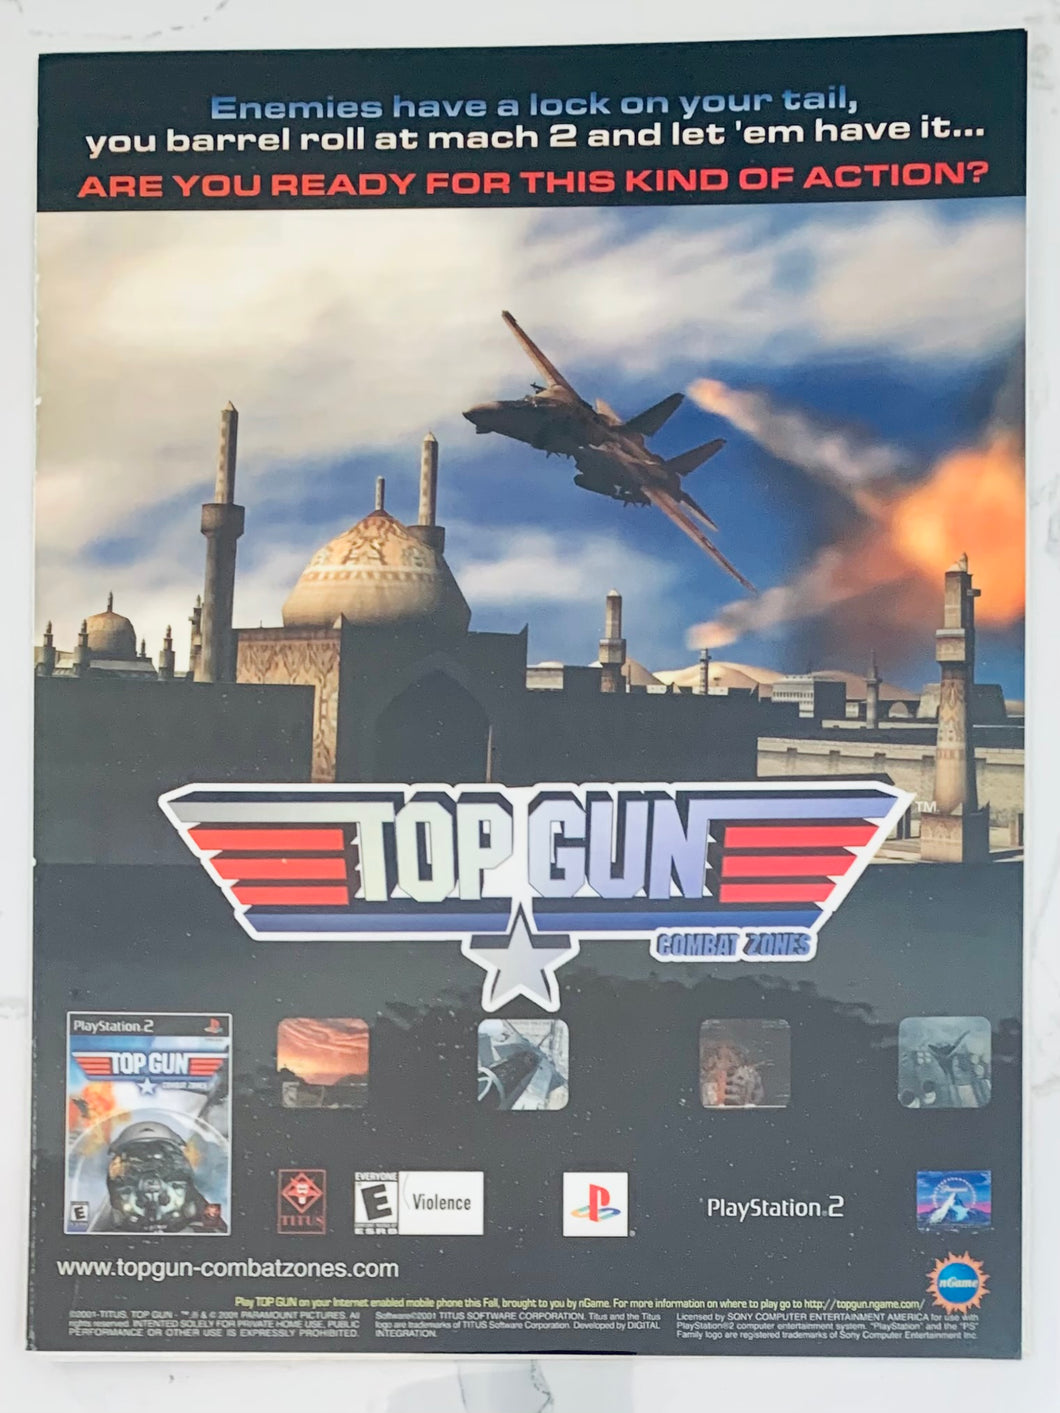 Top Gun: Combat Zones - PS2 - Original Vintage Advertisement - Print Ads - Laminated A4 Poster